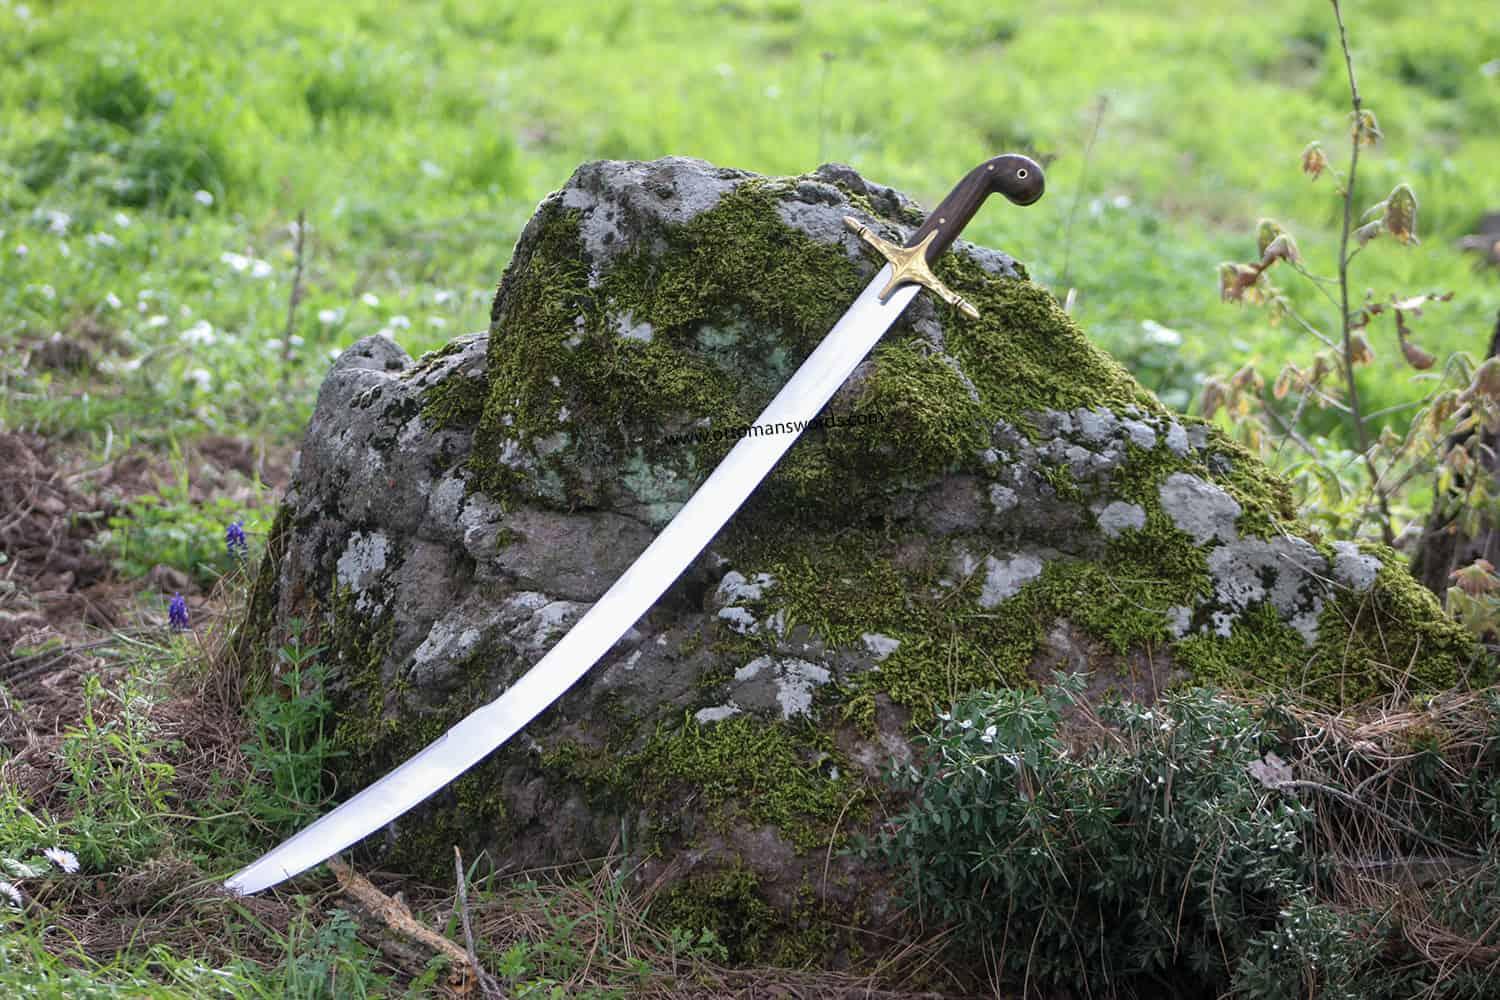 swords with sheaths (2)